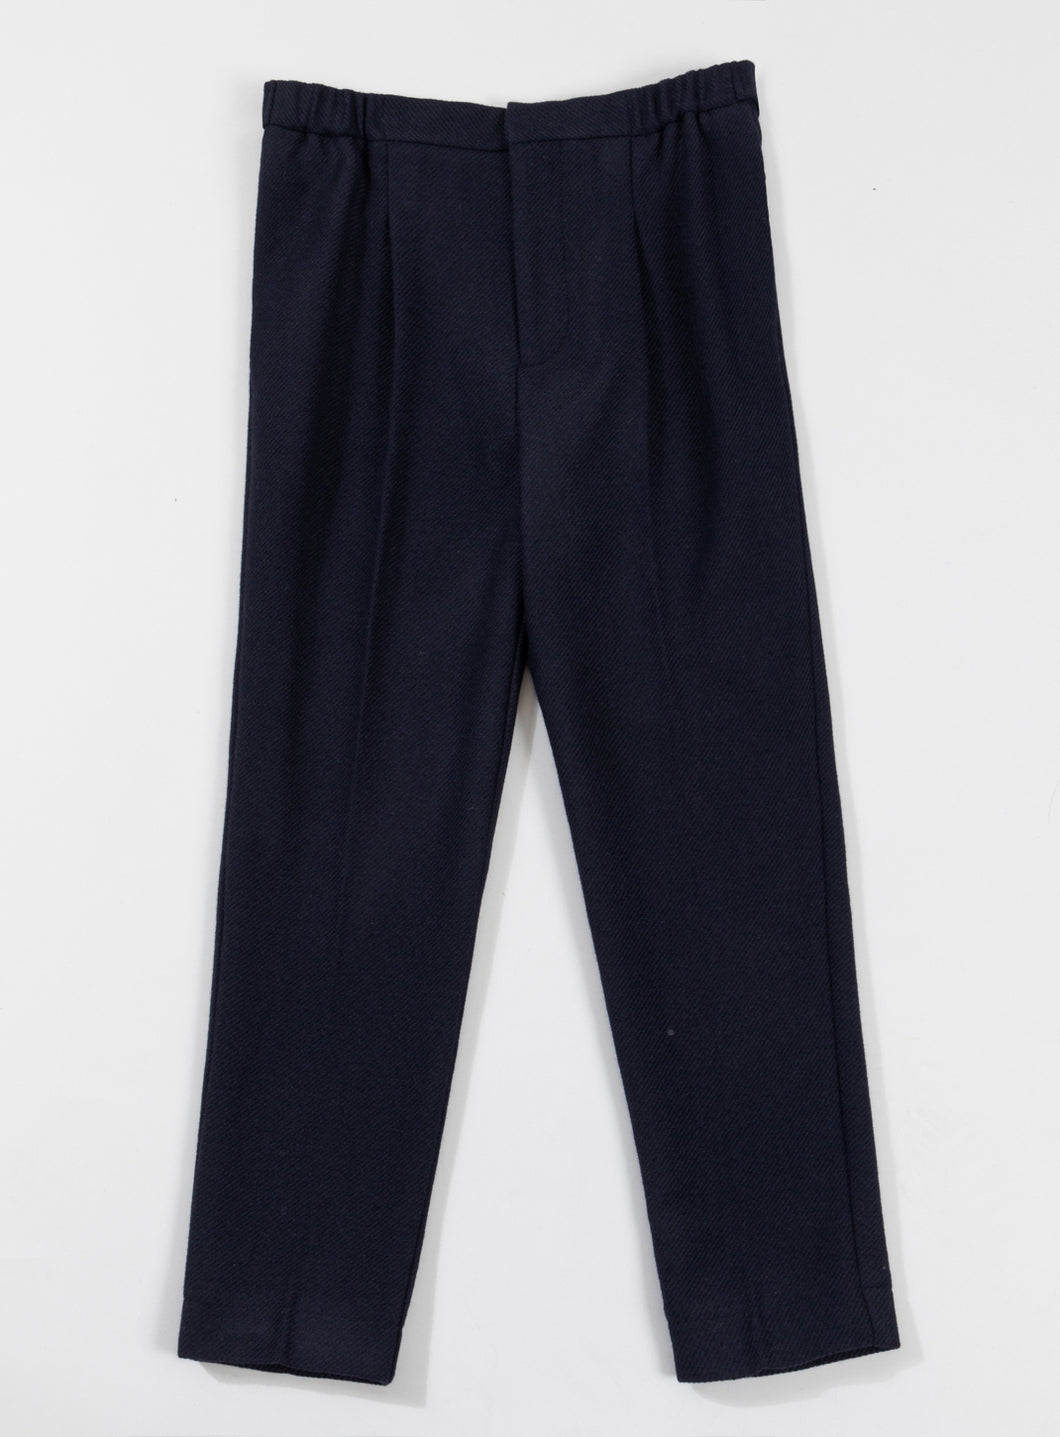 Pleated Pants in Navy Blue Wool